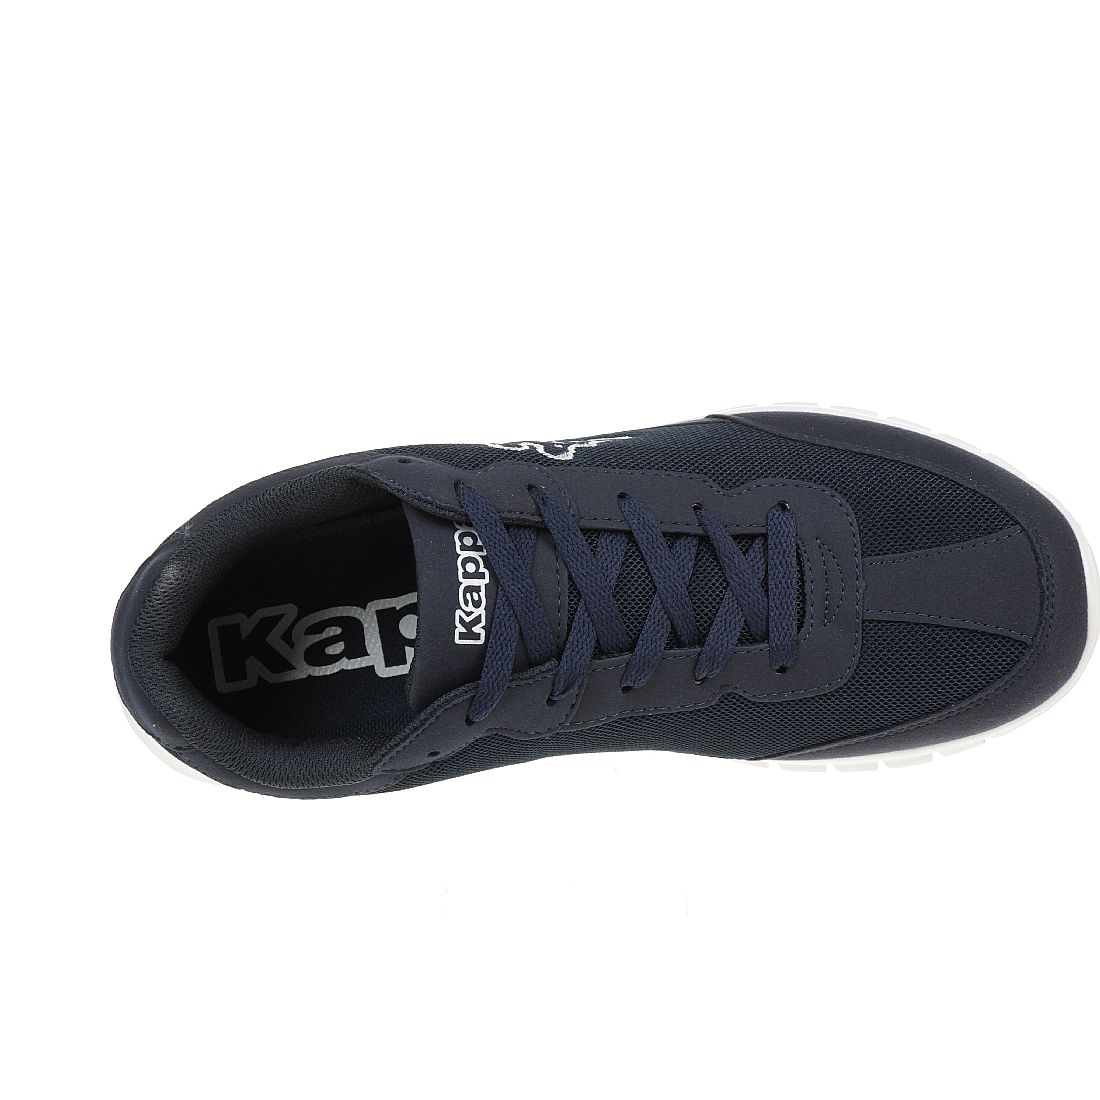 Kappa Rocket Sneaker unisex schwarz navy Turnschuhe Schuhe 242130/6710